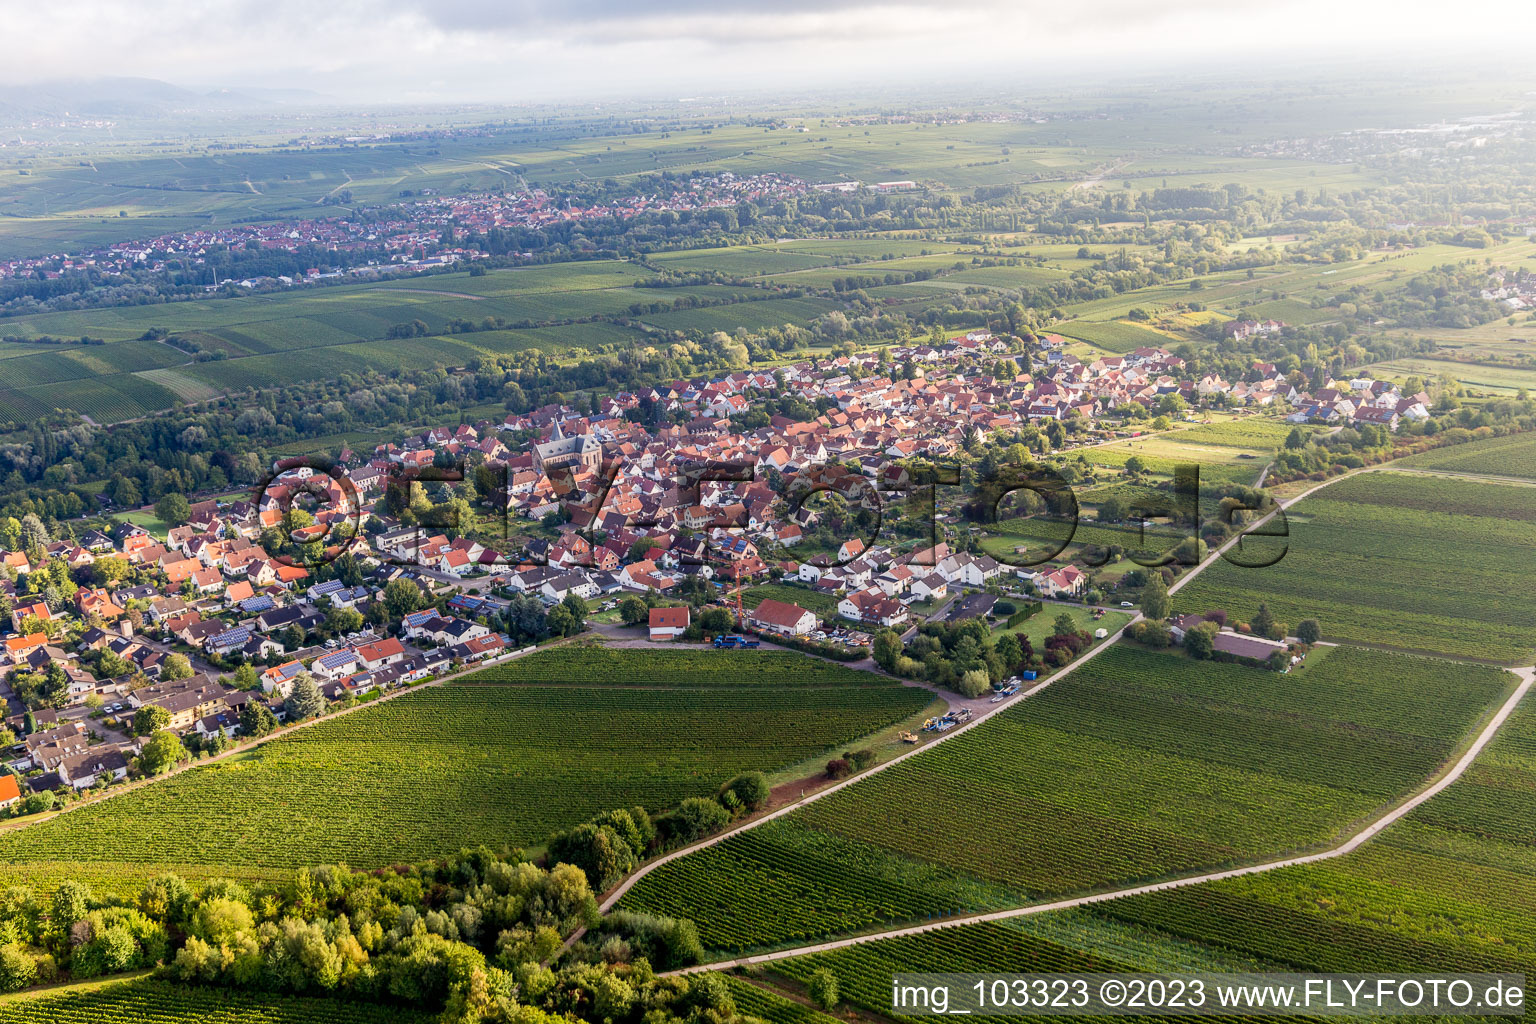 Aerial view of District Arzheim in Landau in der Pfalz in the state Rhineland-Palatinate, Germany